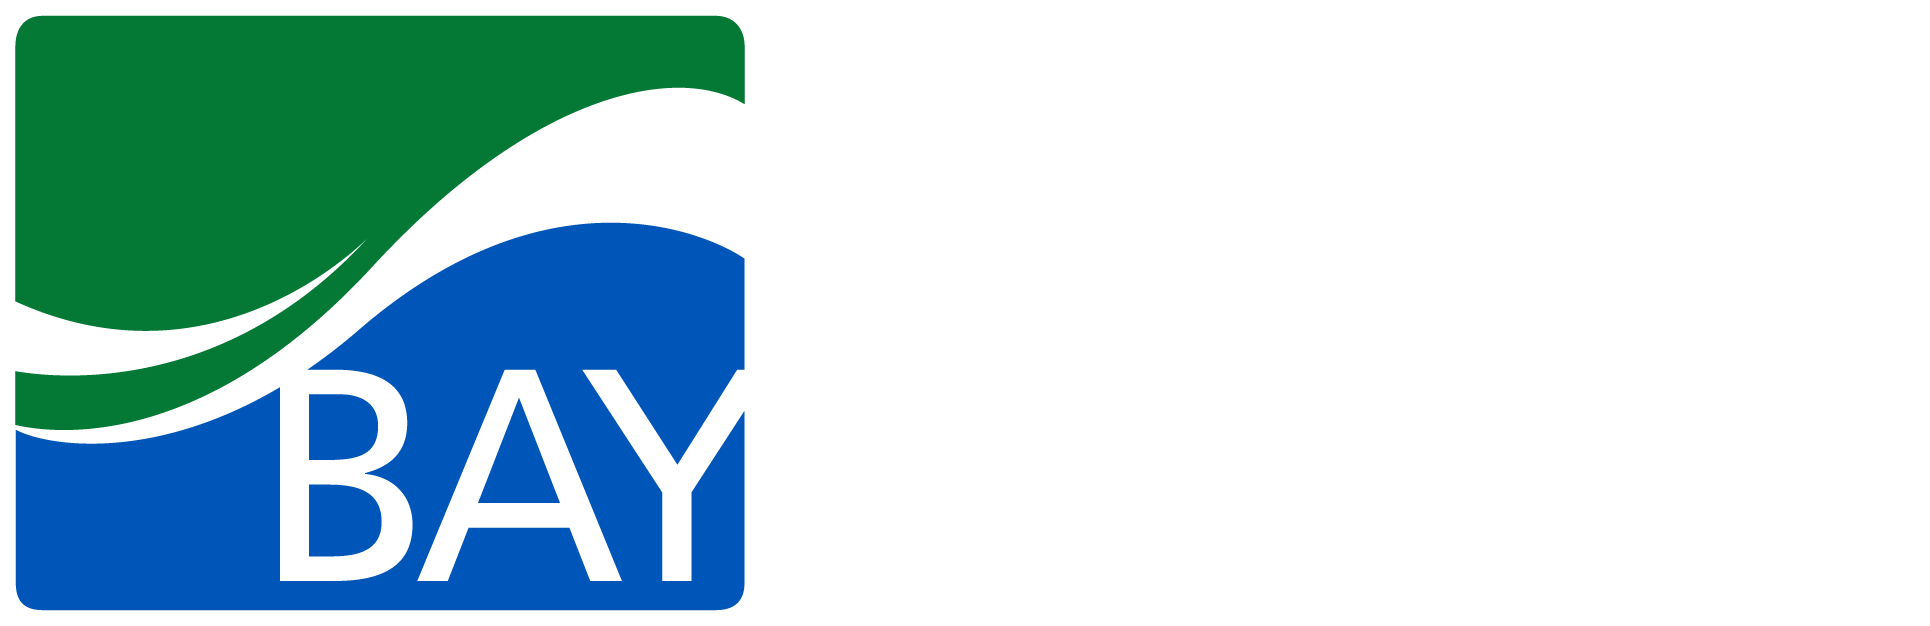 Bay College Logo